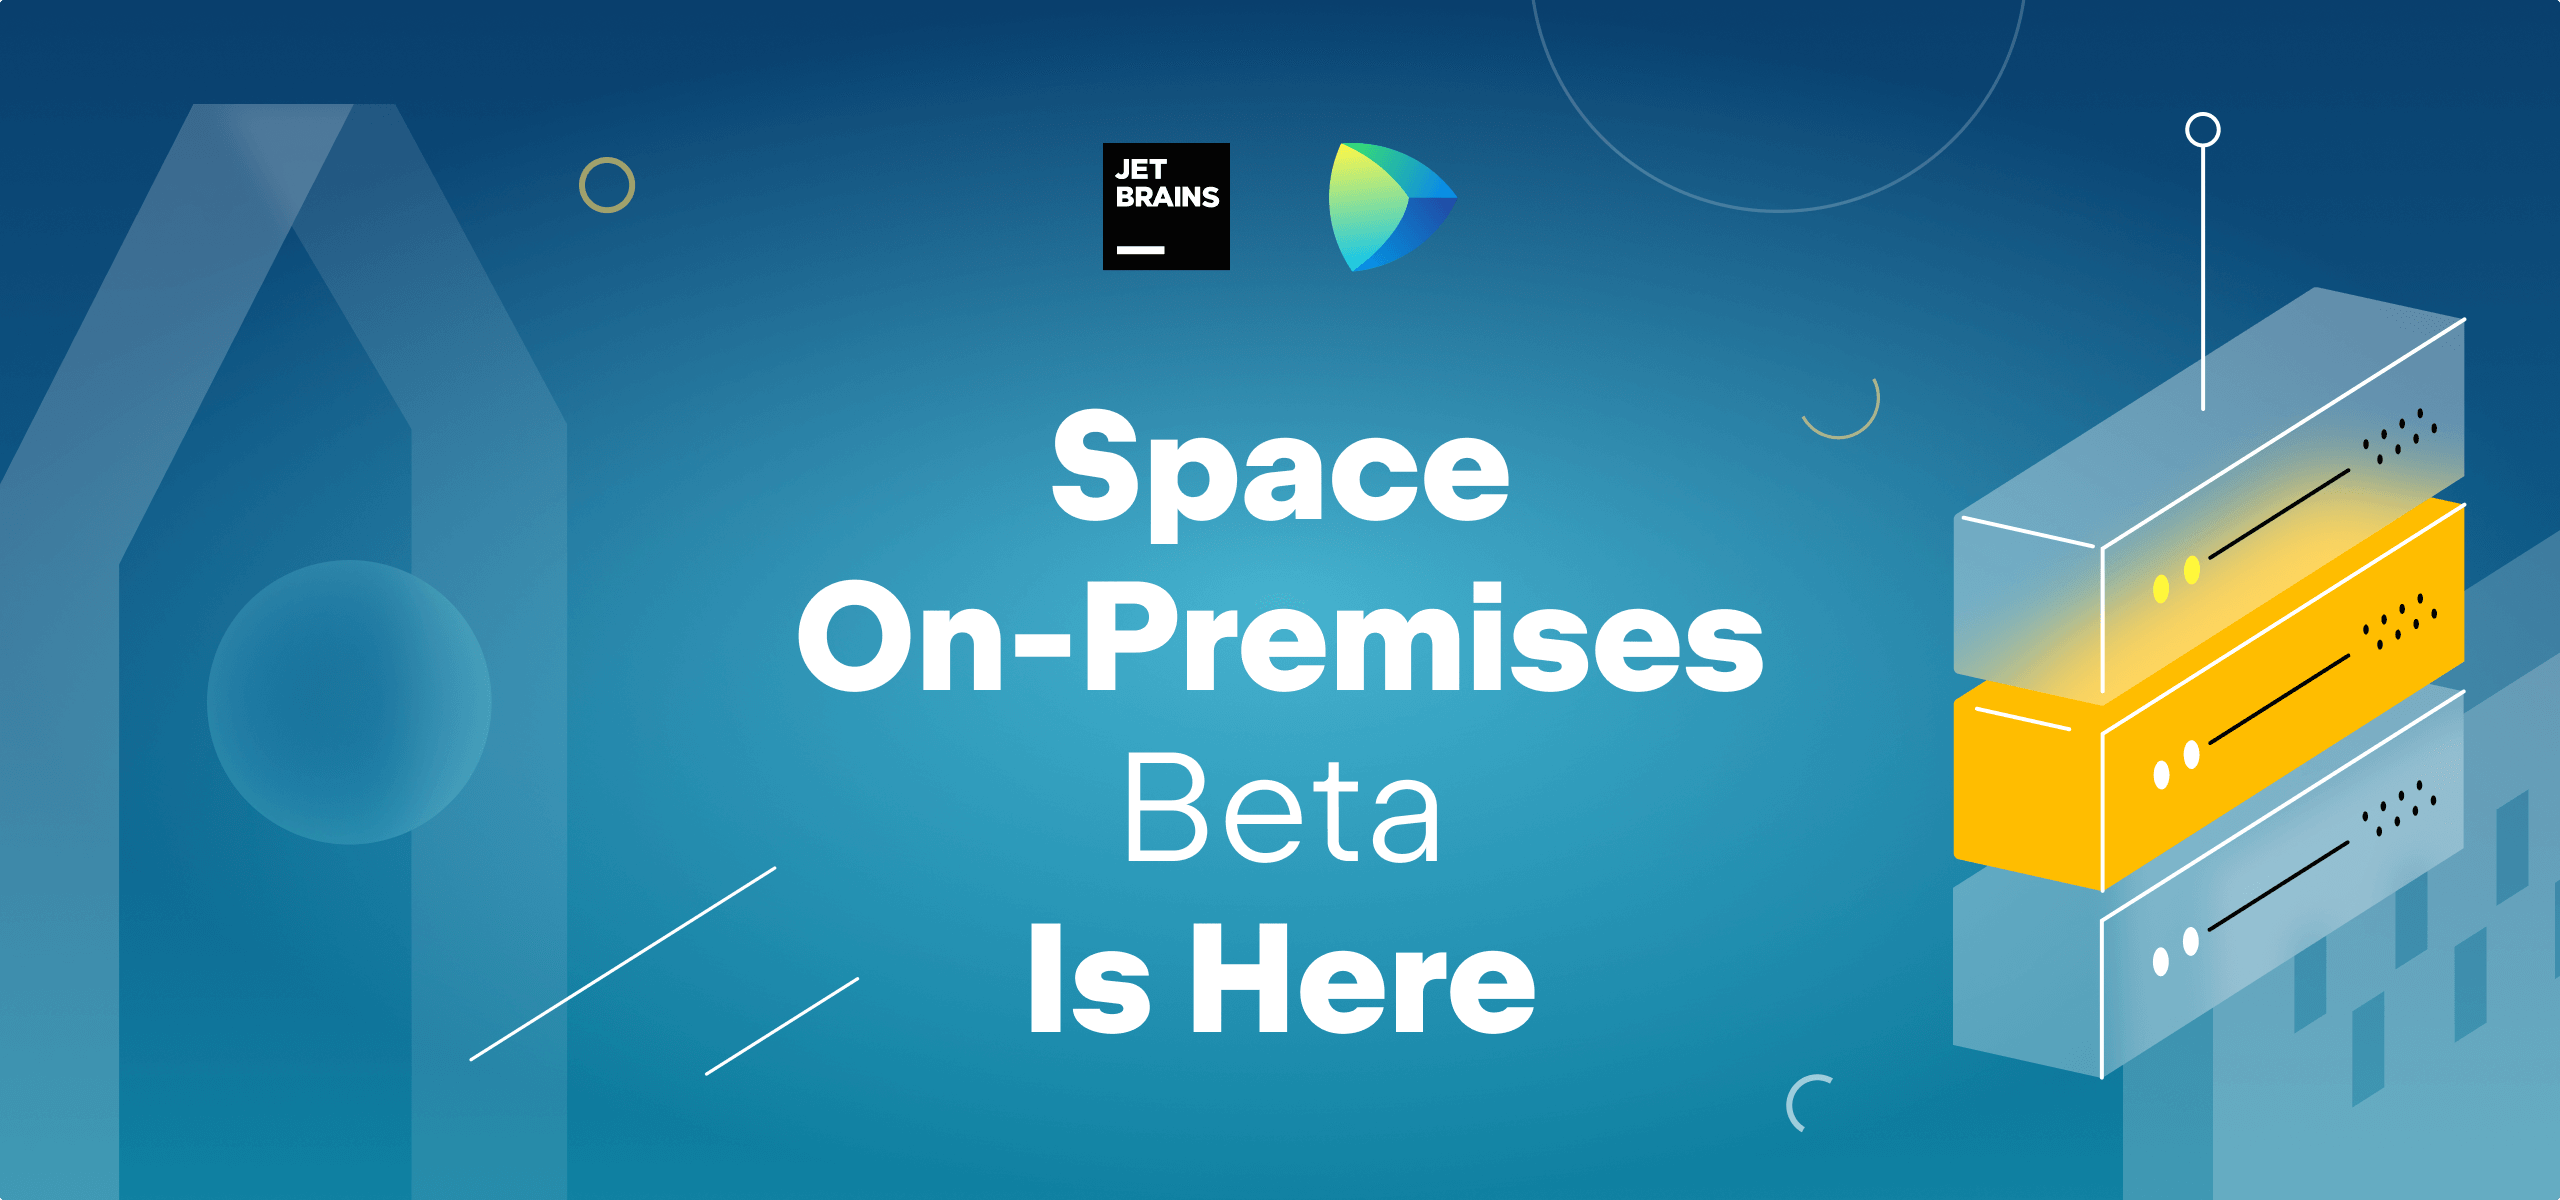 Space On-Premises Beta Is Here